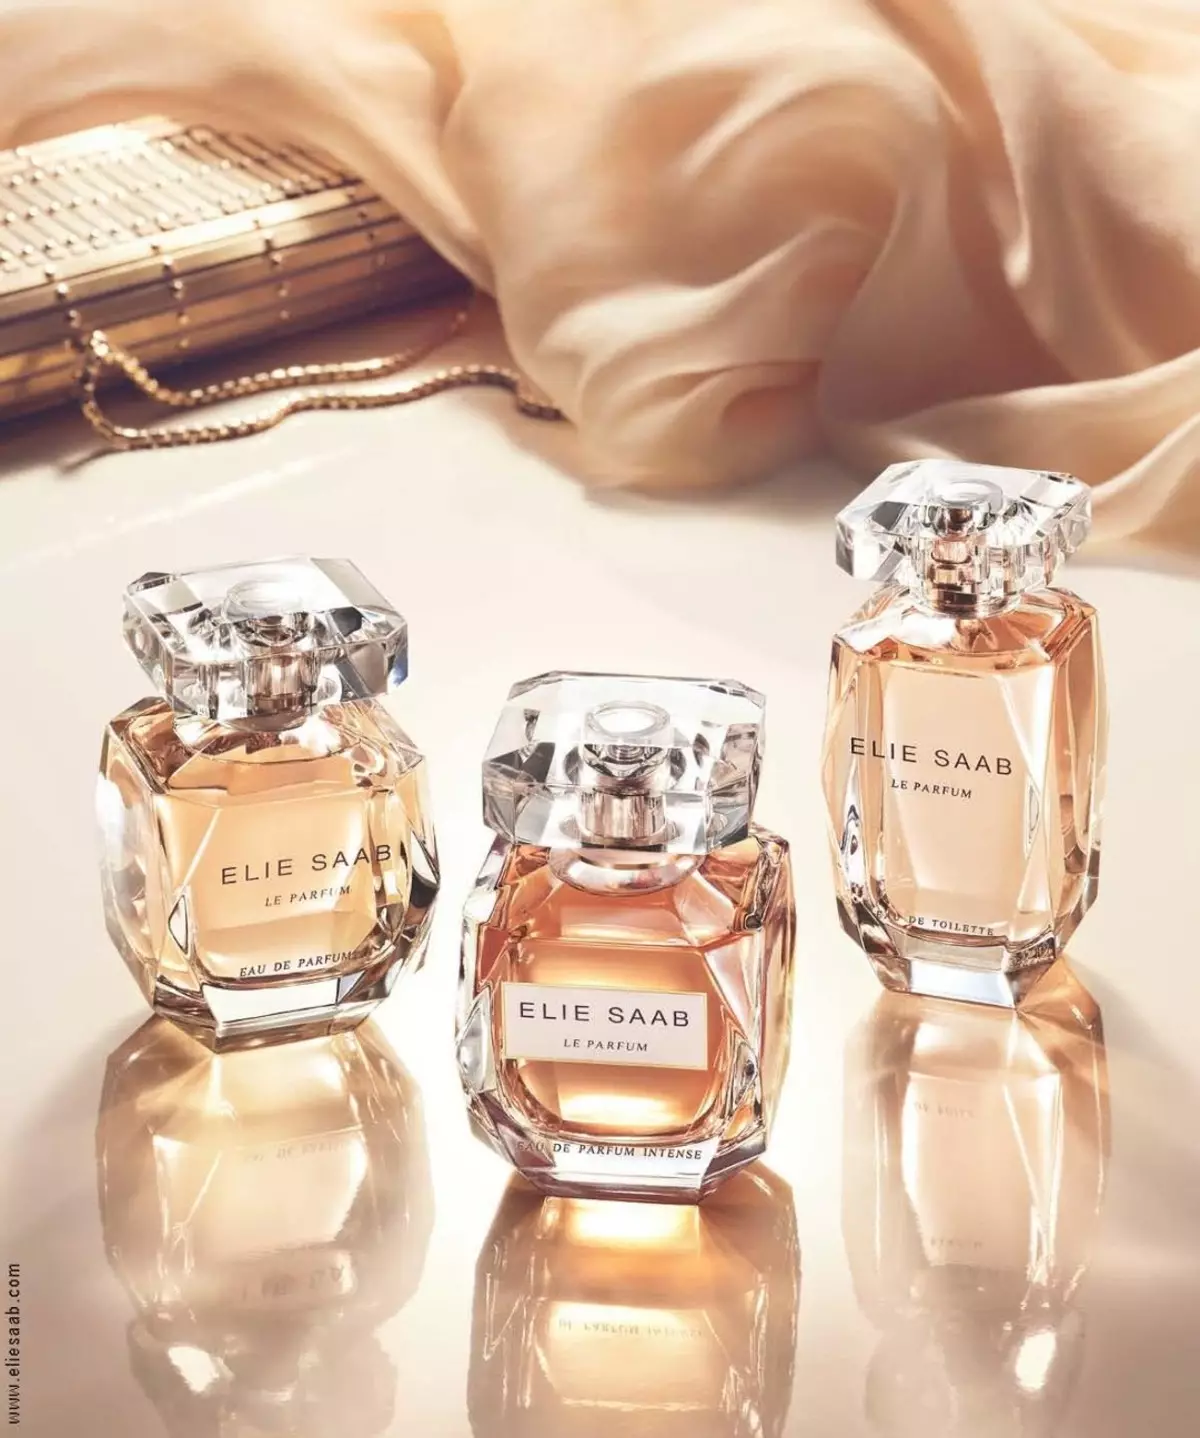 Perfum Elie Saab: Τα πνεύματα Le Parfum Royal, Le Parfum Essentiel, κορίτσι τώρα, Le Parfum σε λευκό και τουαλέτα Water Rose Couture, σχόλια 25329_12